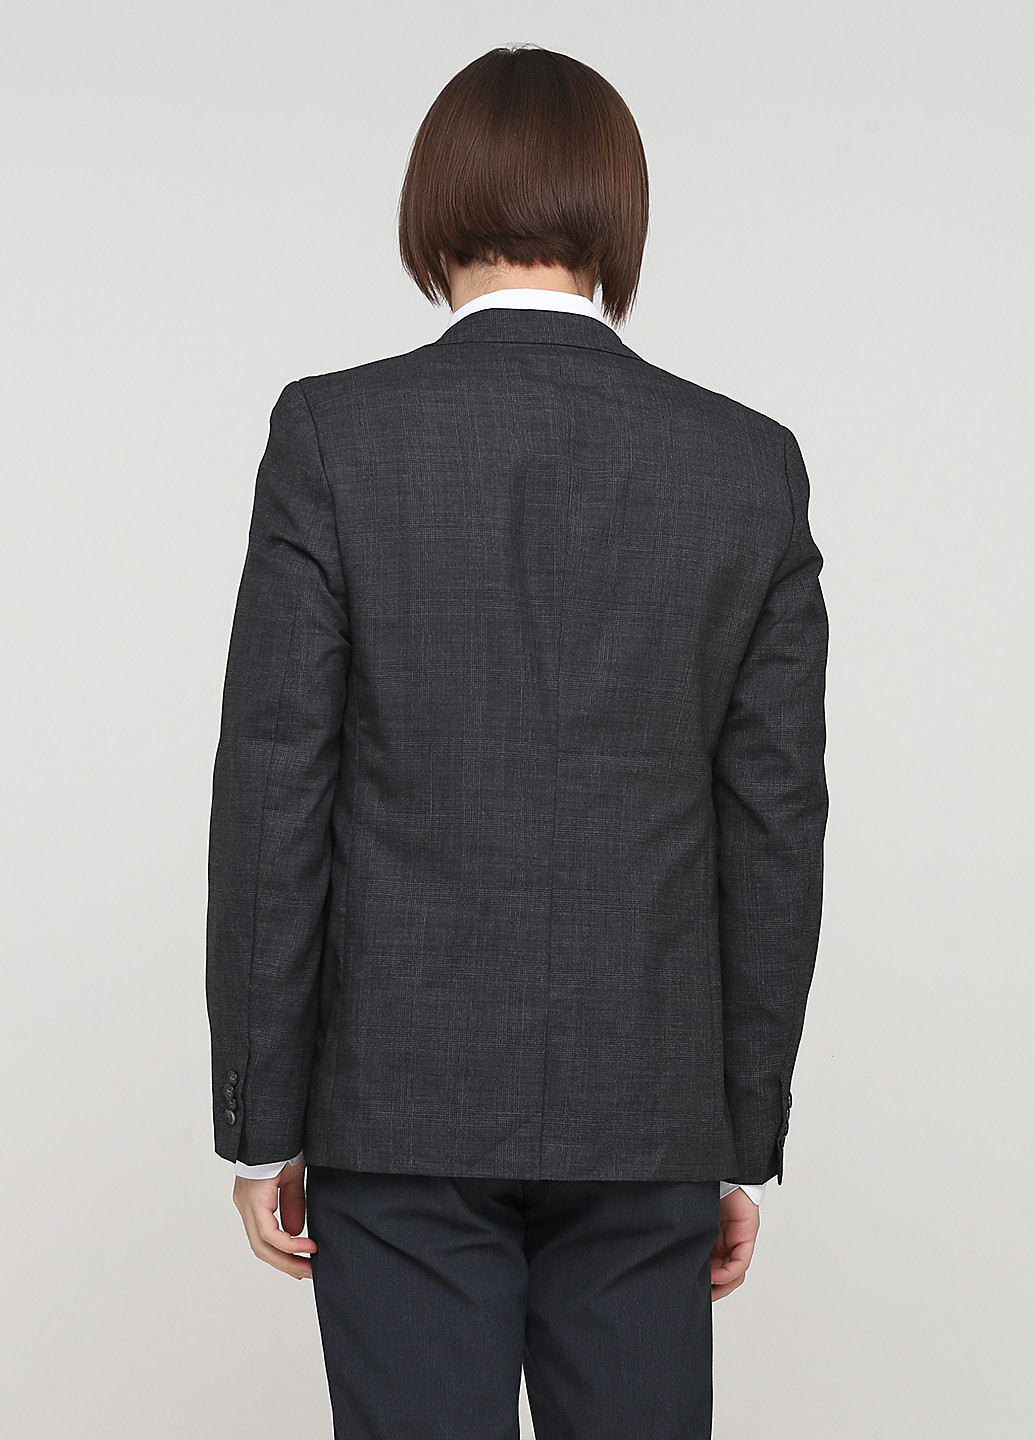 Пиджак Nyden by H&M клетка тёмно-серый кэжуал шерсть